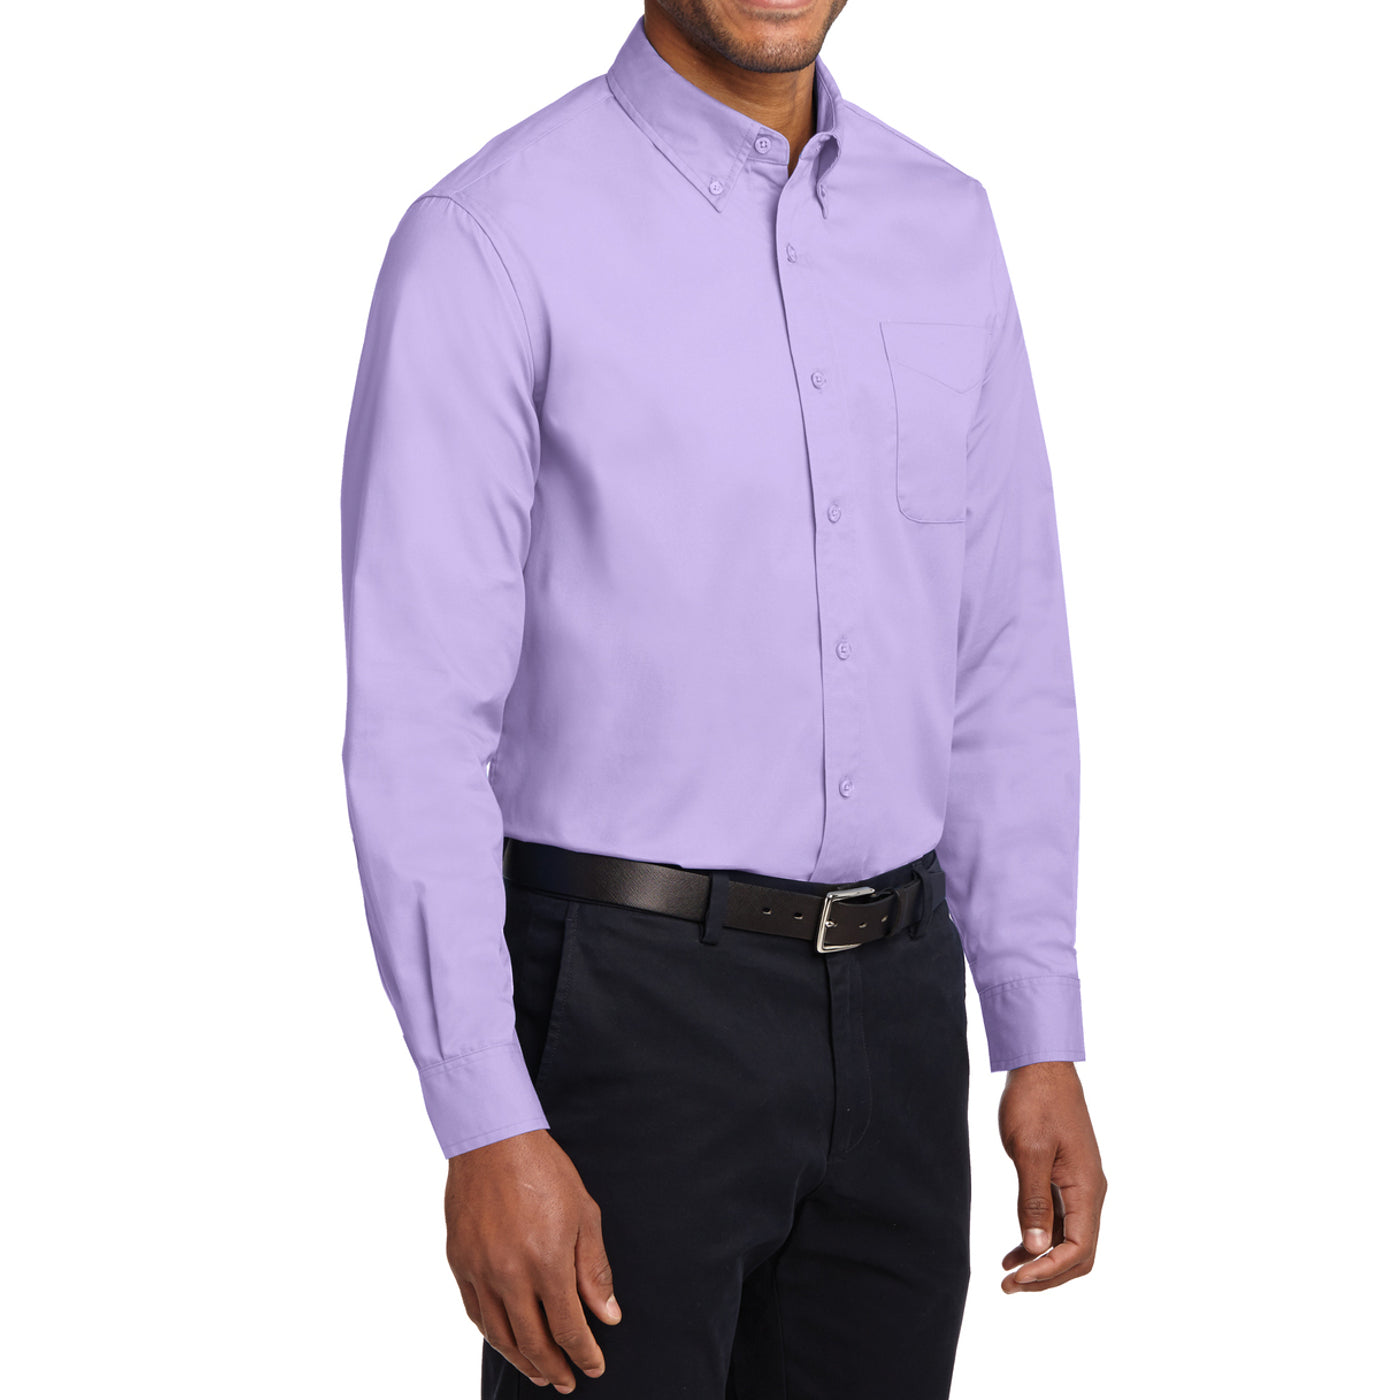 Men's Long Sleeve Easy Care Shirt - Bright Lavender - Side